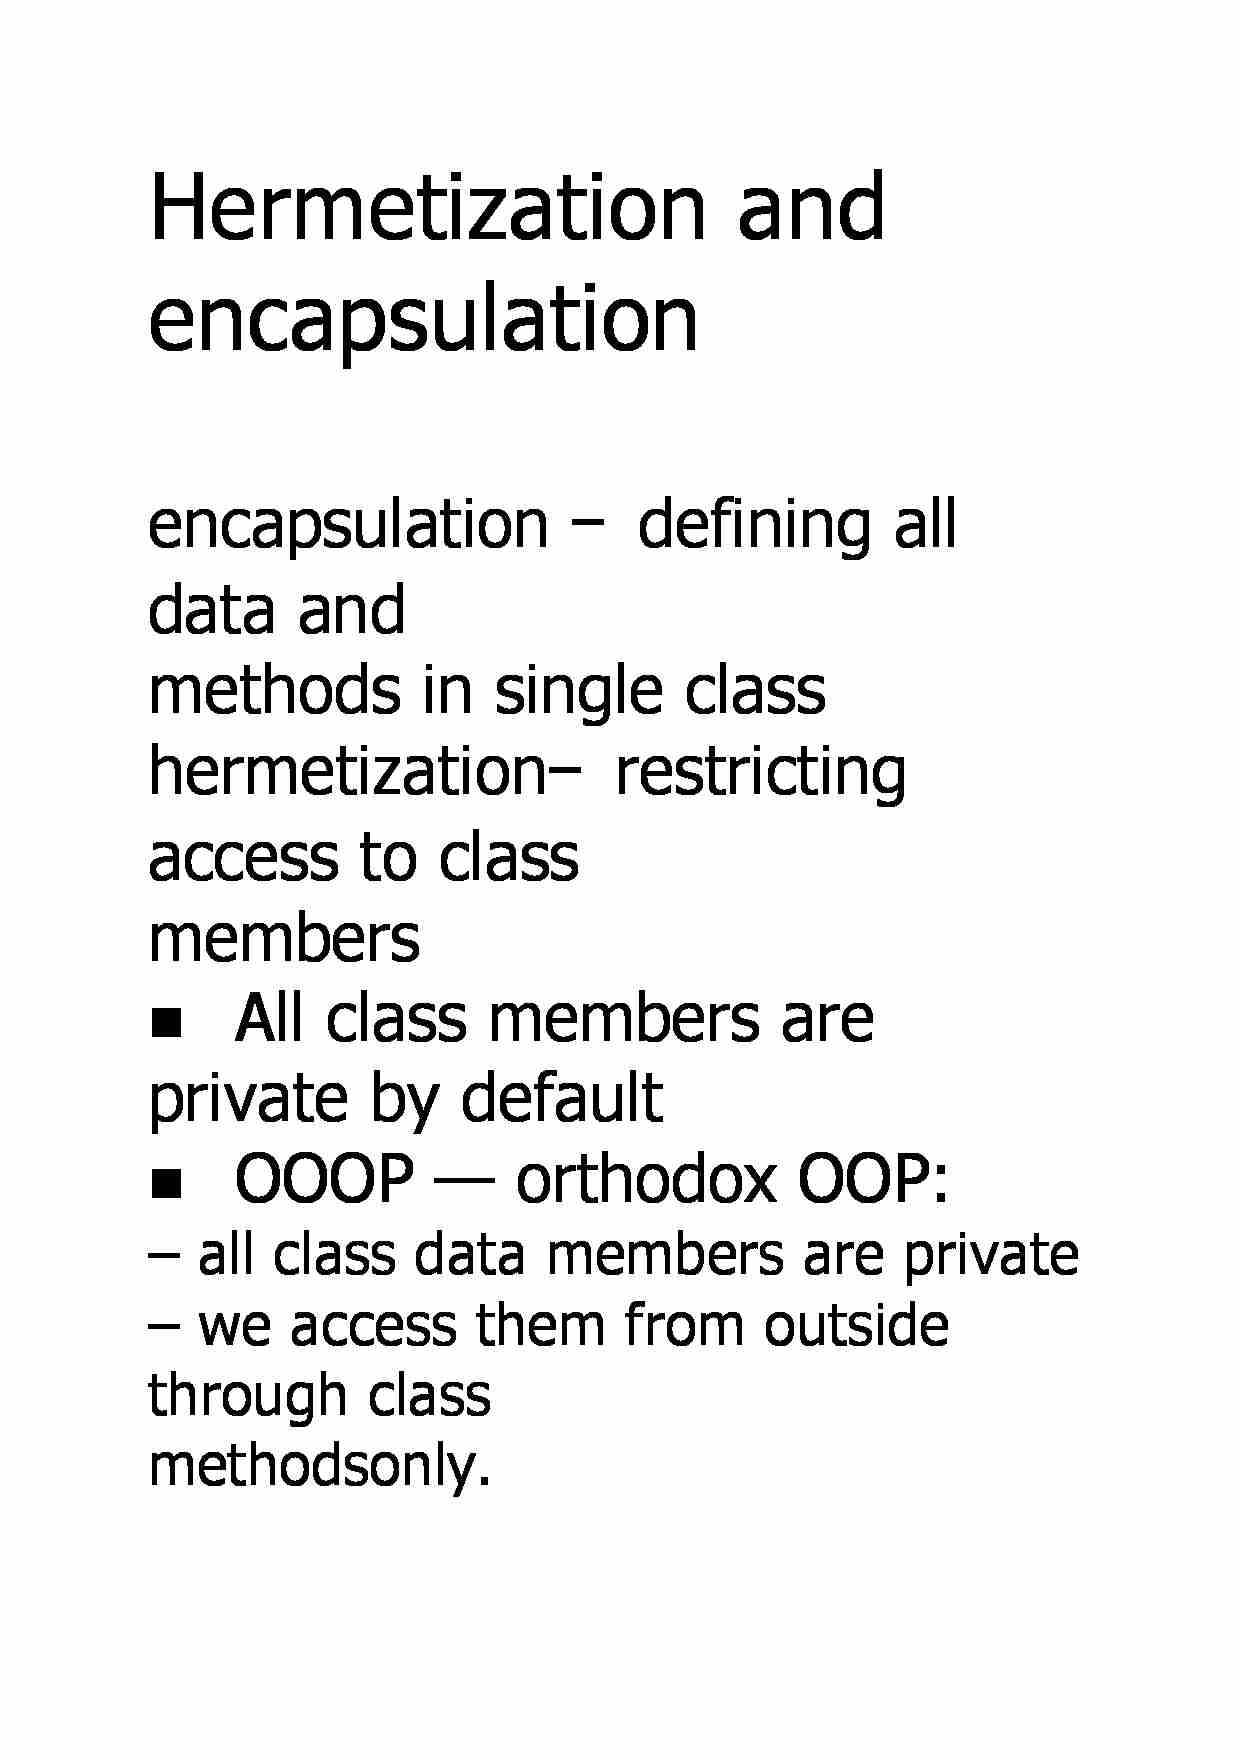 Hermetization and encapsulation - strona 1